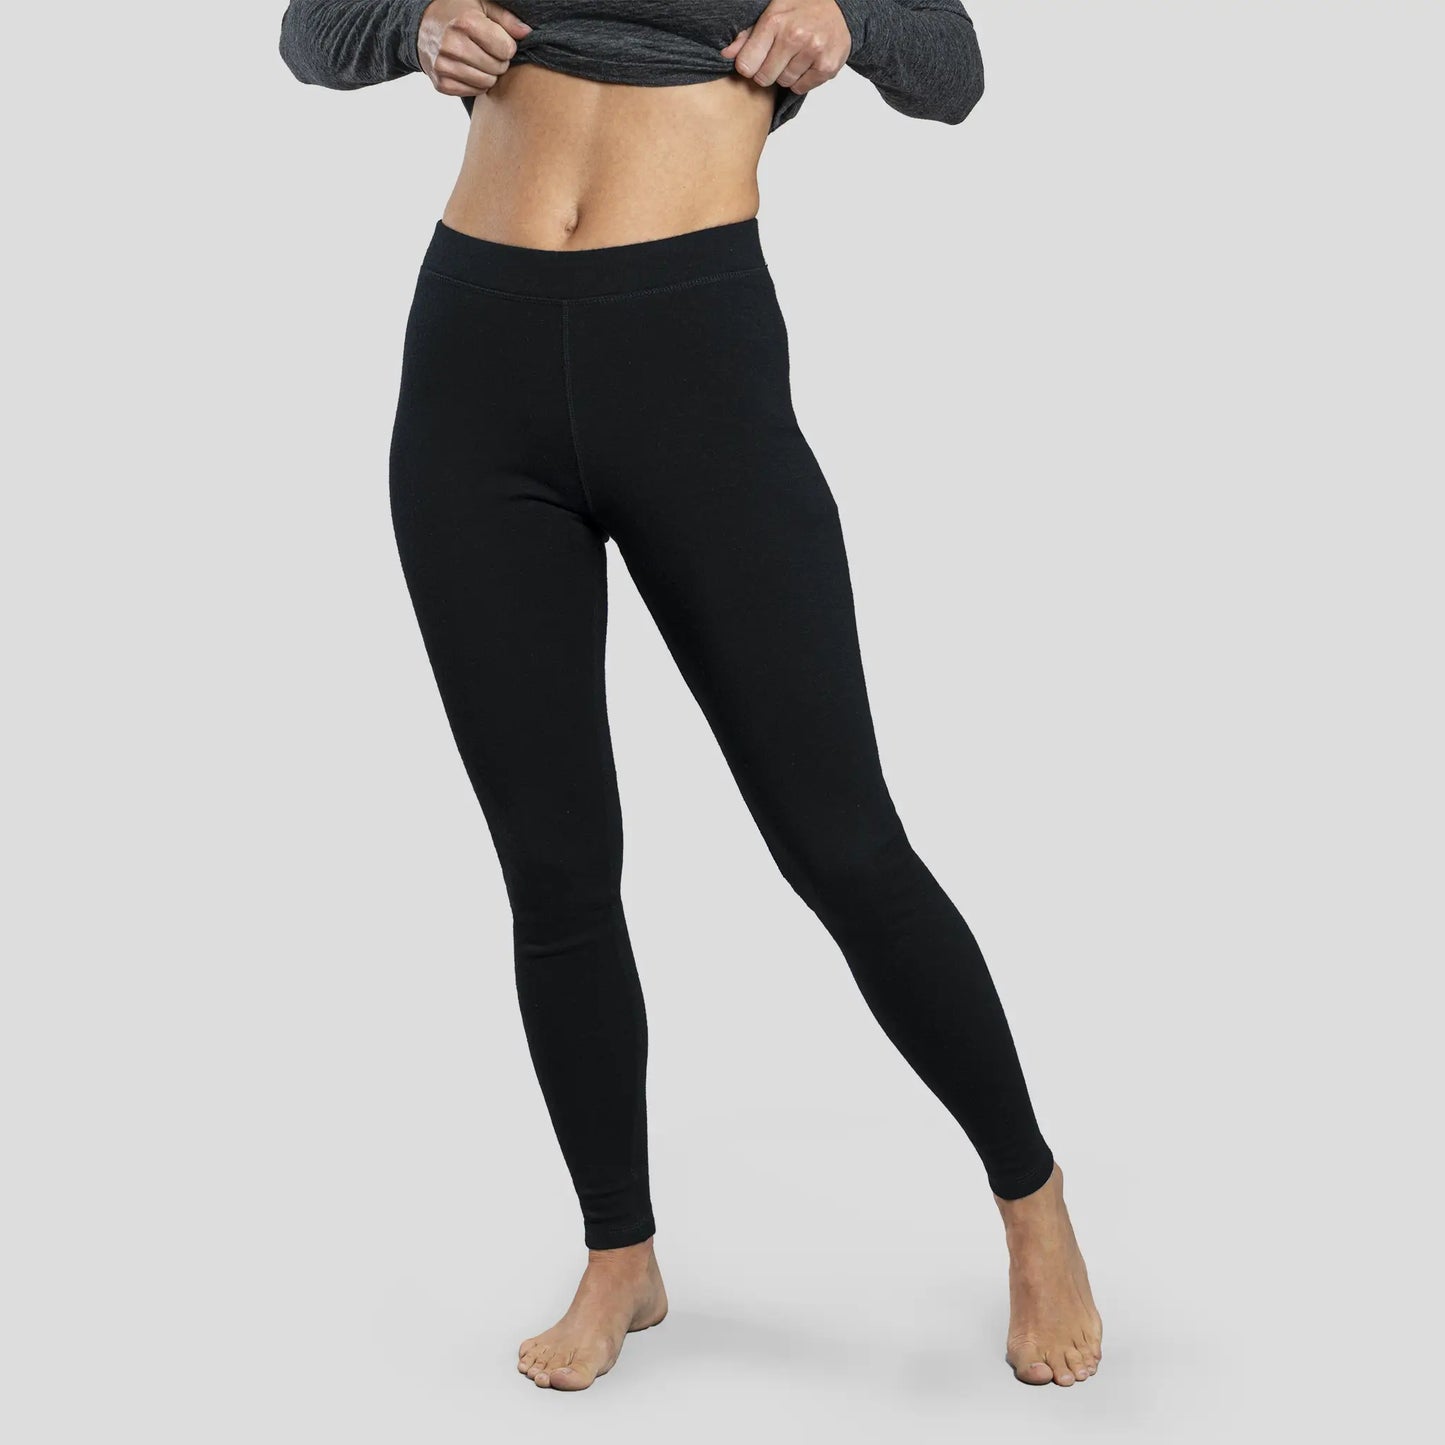  womens low impact dye leggings lightweight color black